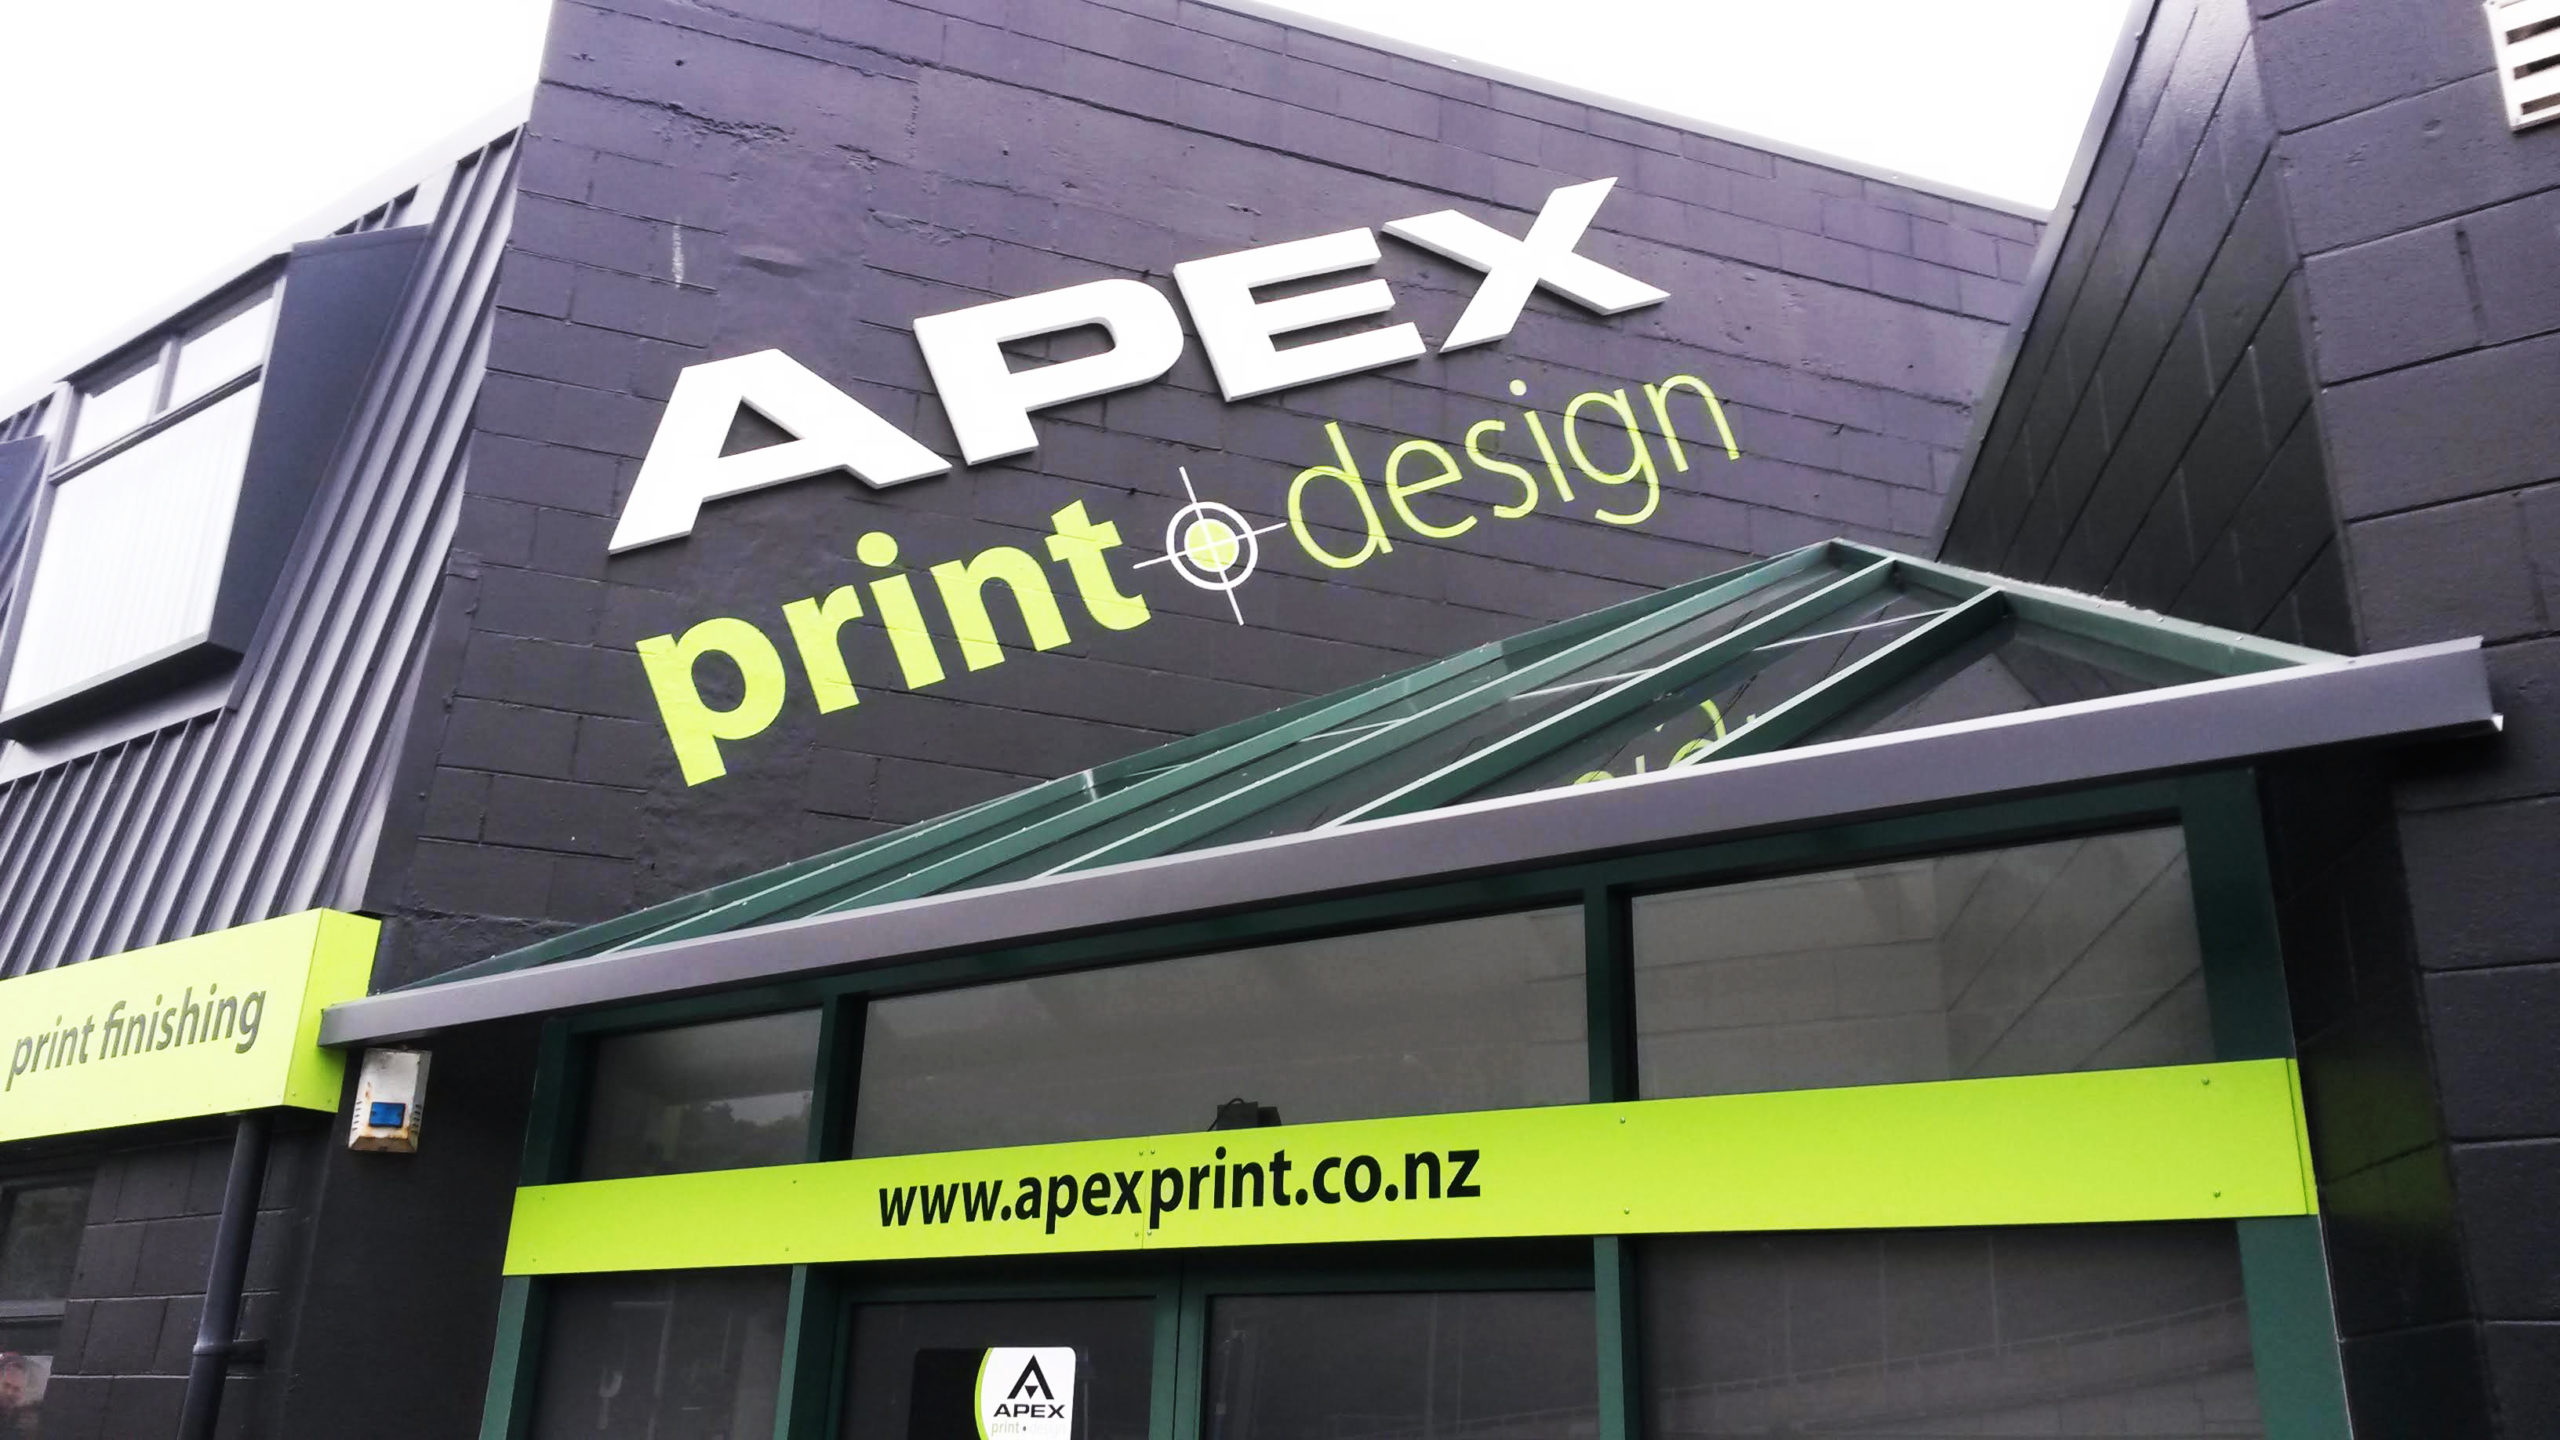 Apex Print and Design image.